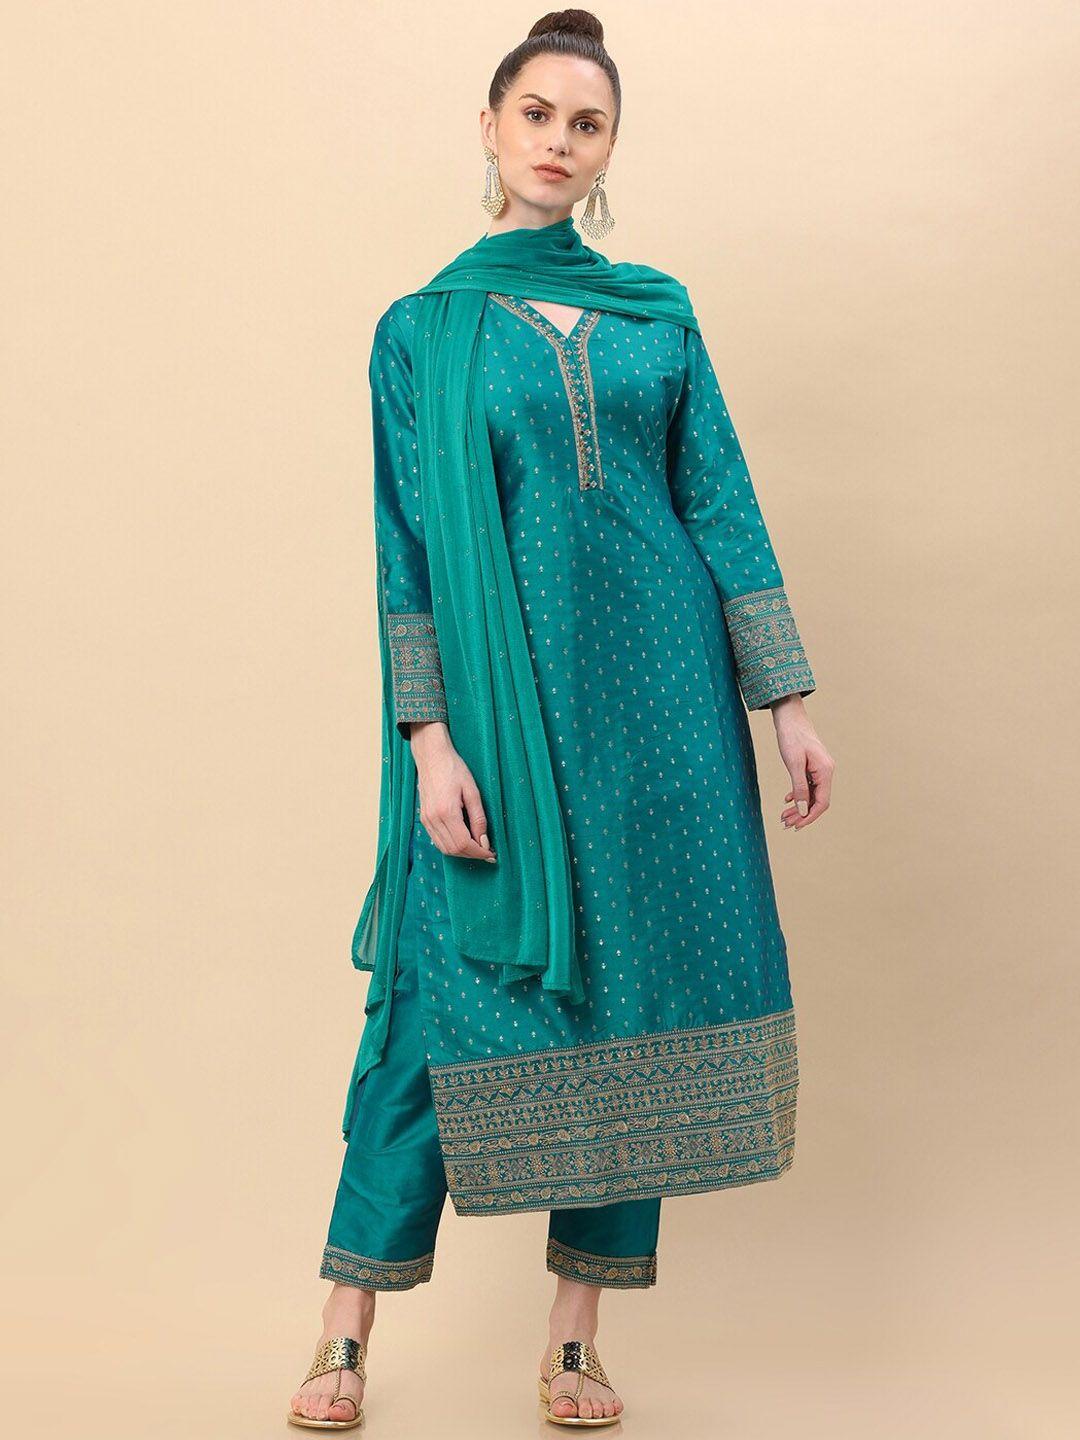 soch-women-turquoise-blue-ethnic-motifs-beads-and-stones-kurta-with-pyjama-&-dupatta